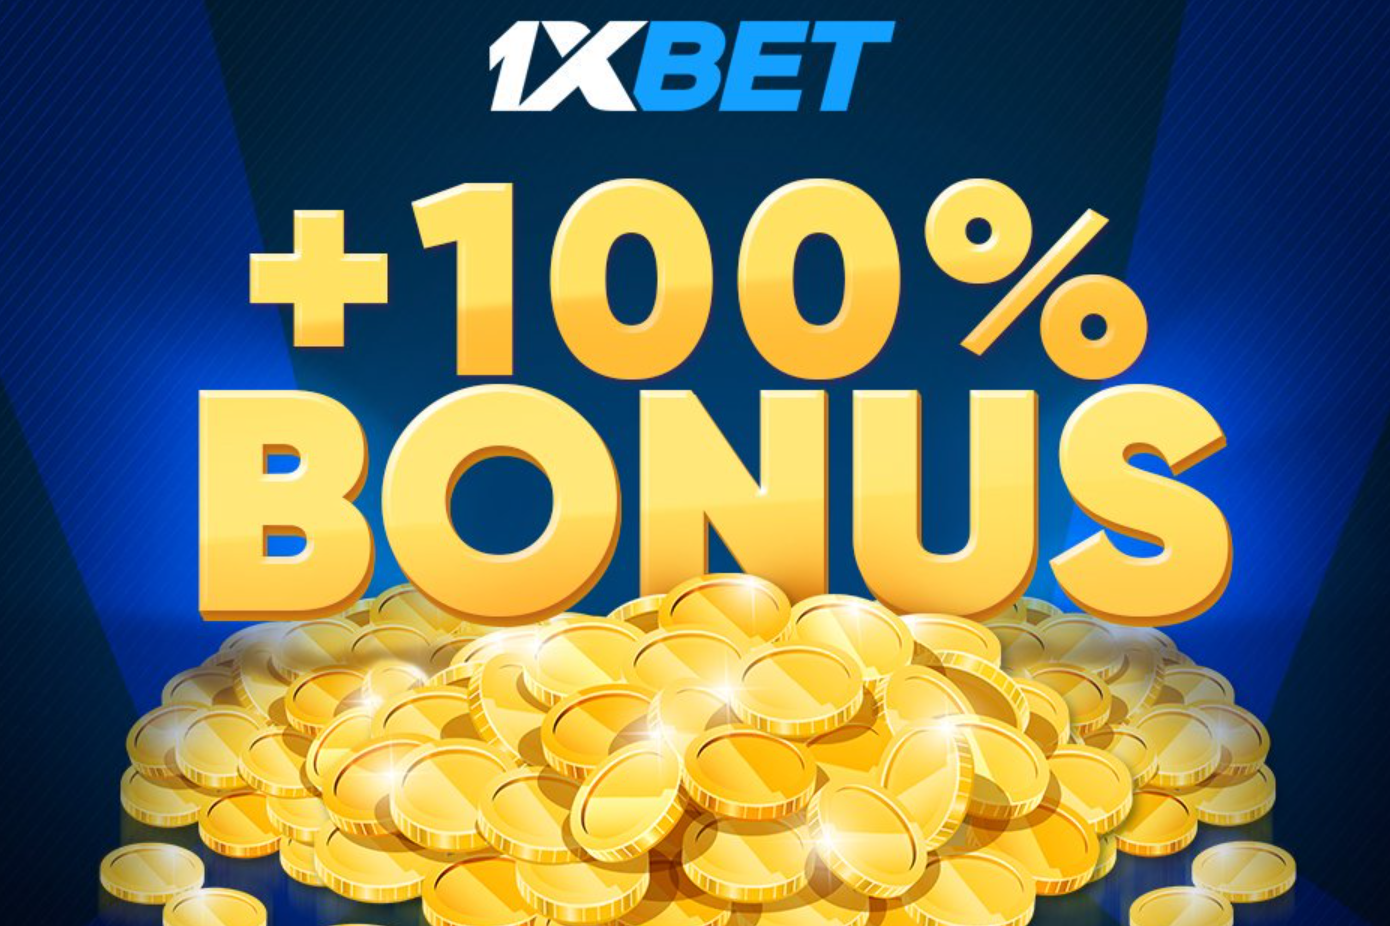 1xBet Casino promo code and welcome bonus